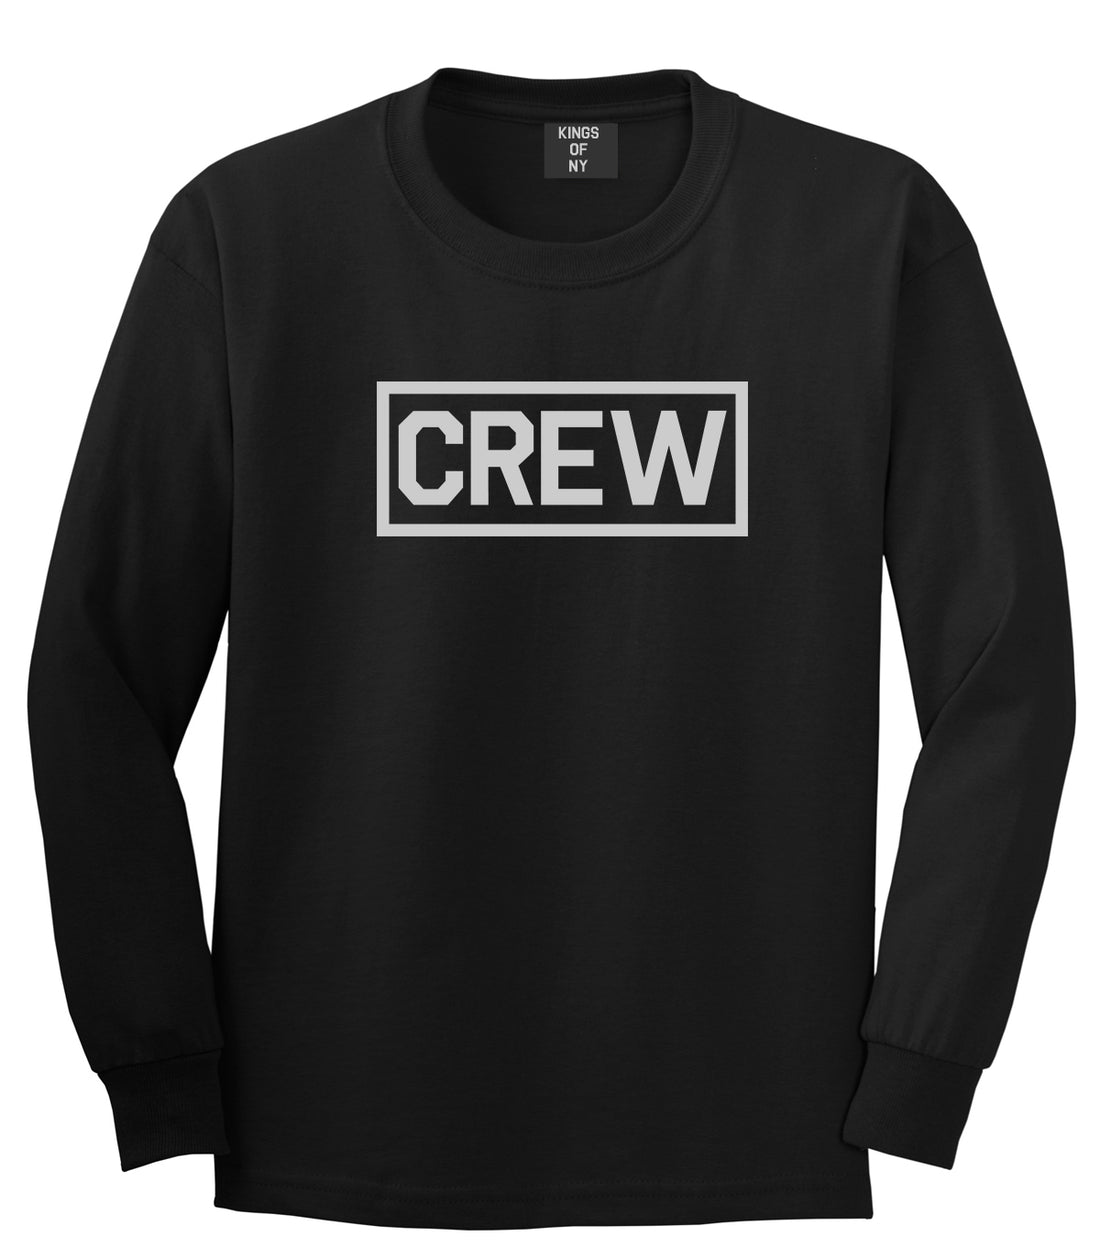 Crew Box Black Long Sleeve T-Shirt by Kings Of NY